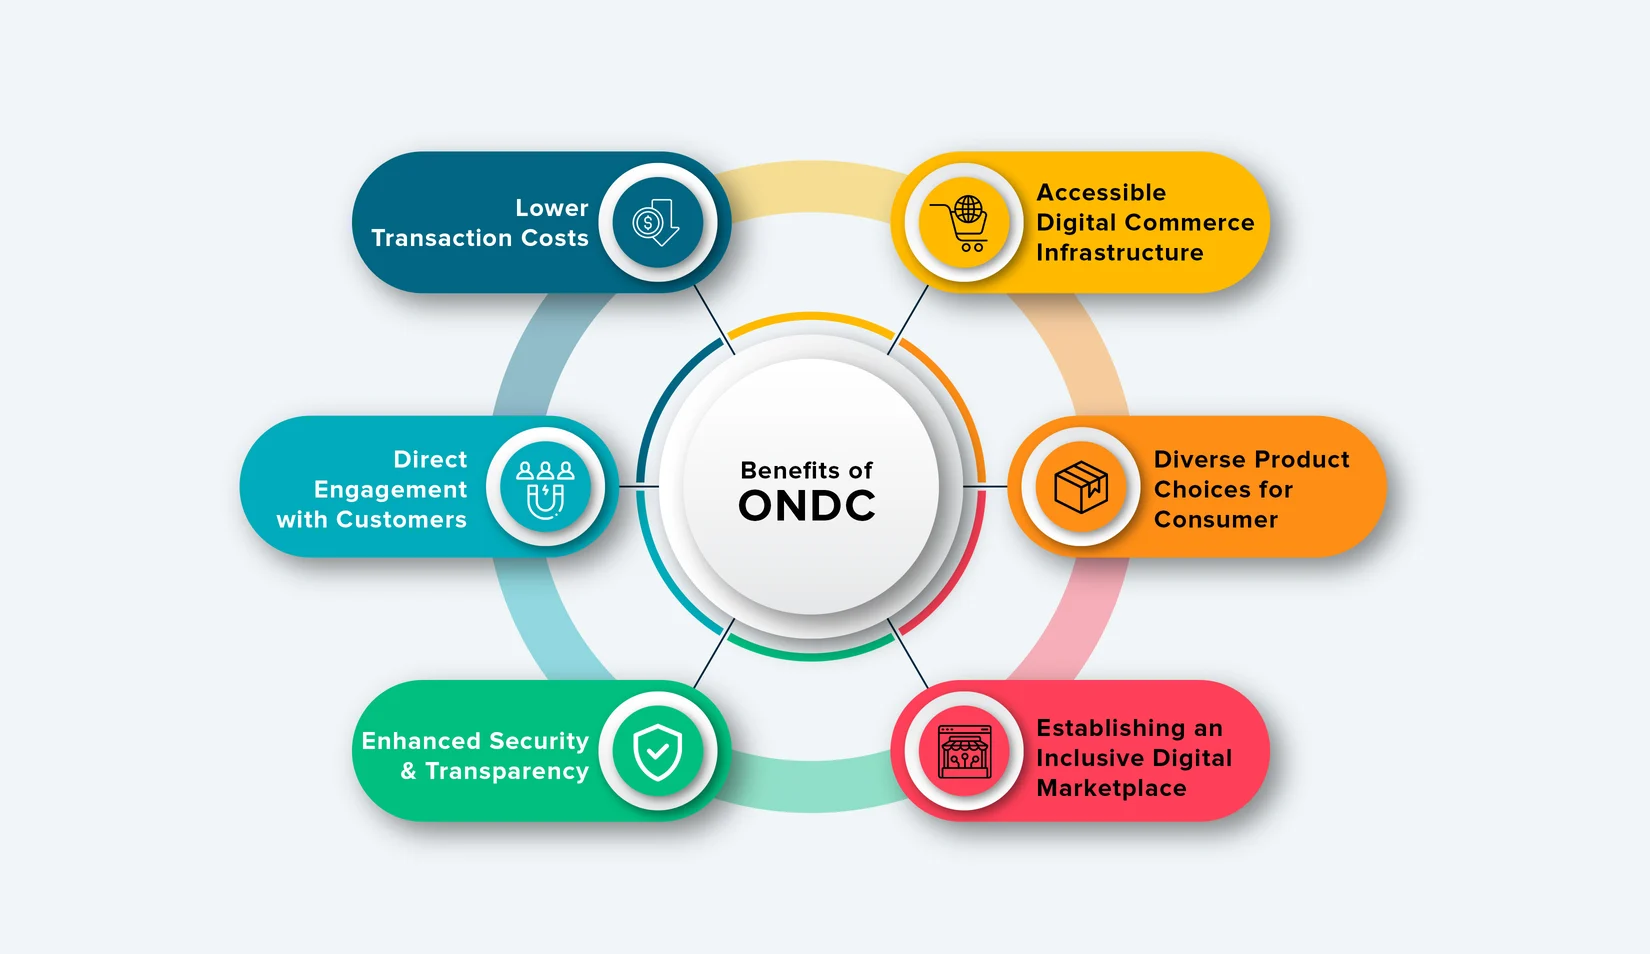 Benefits of ONDC